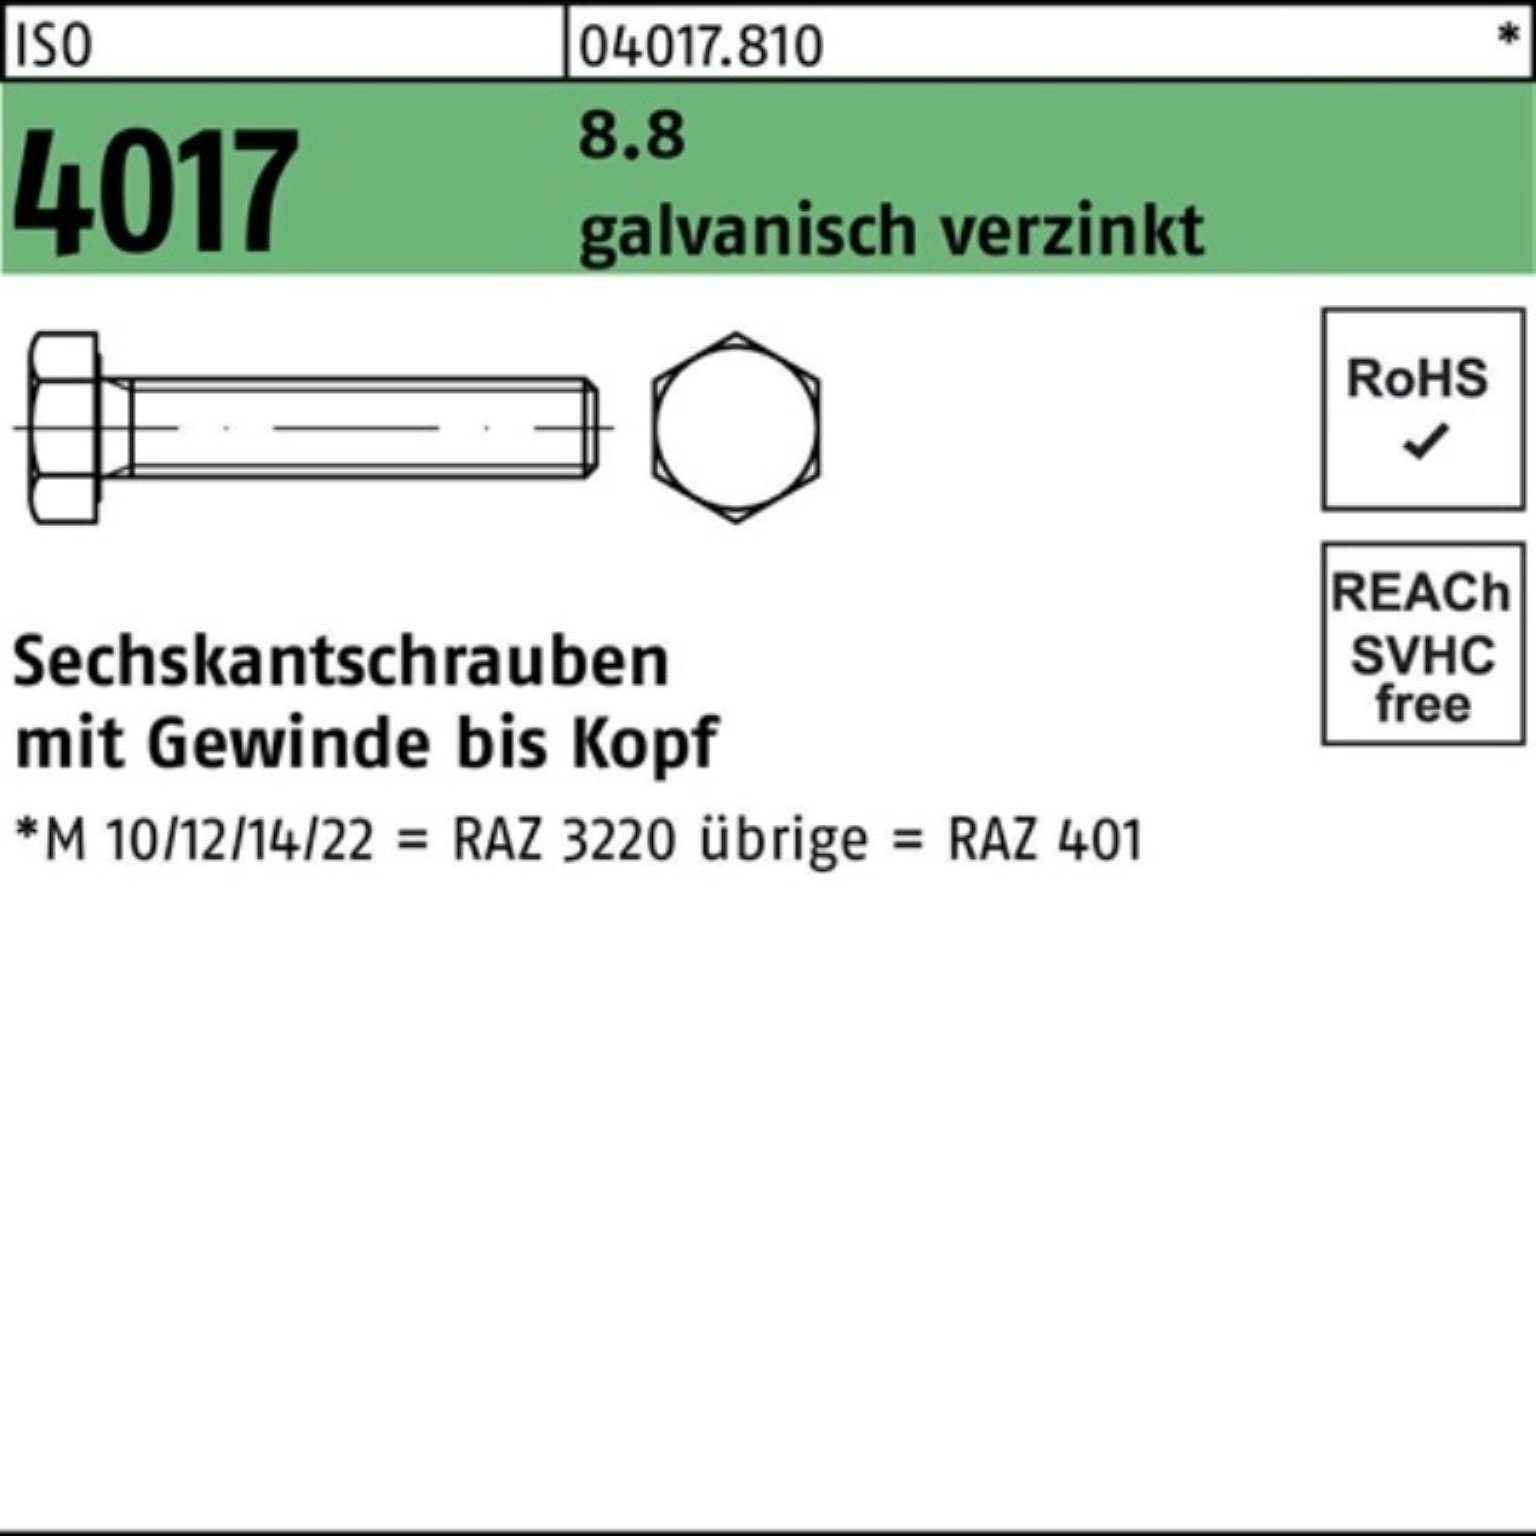 Bufab Sechskantschraube 100er galv.verz. 8.8 Stü M36x 70 4017 ISO Pack Sechskantschraube VG 1